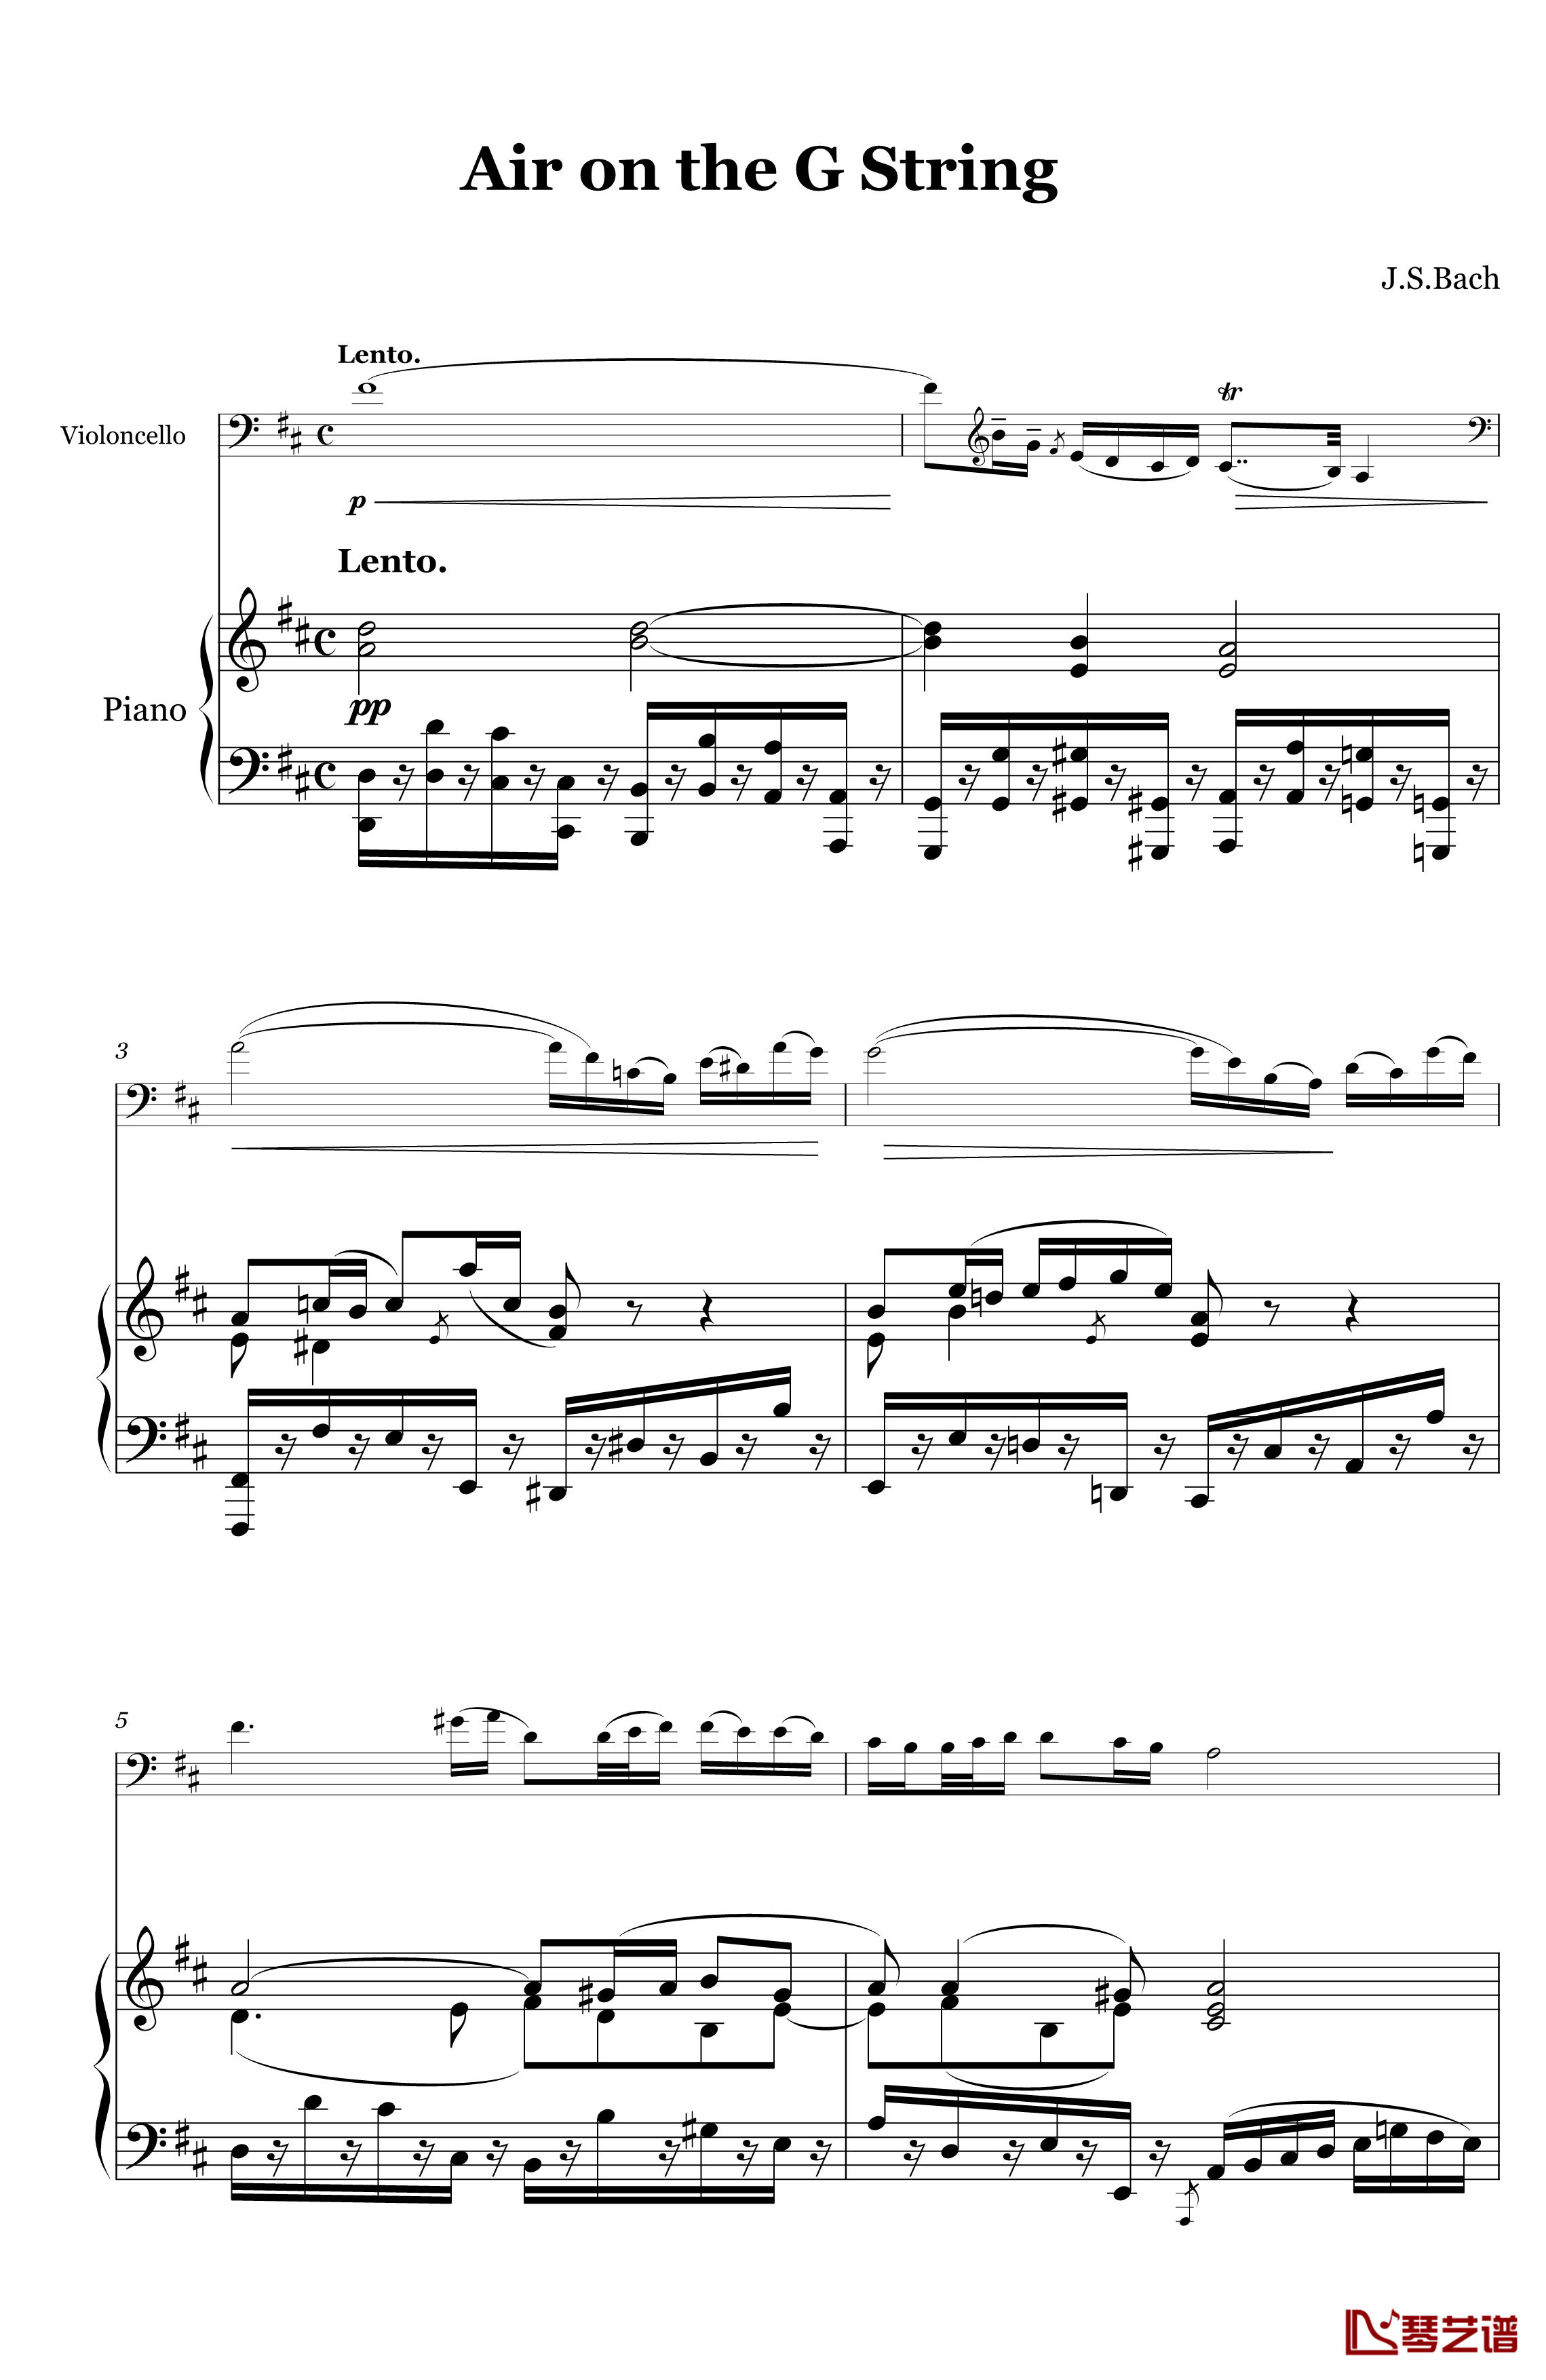 G弦之歌钢琴谱-巴赫-P.E.Bach1